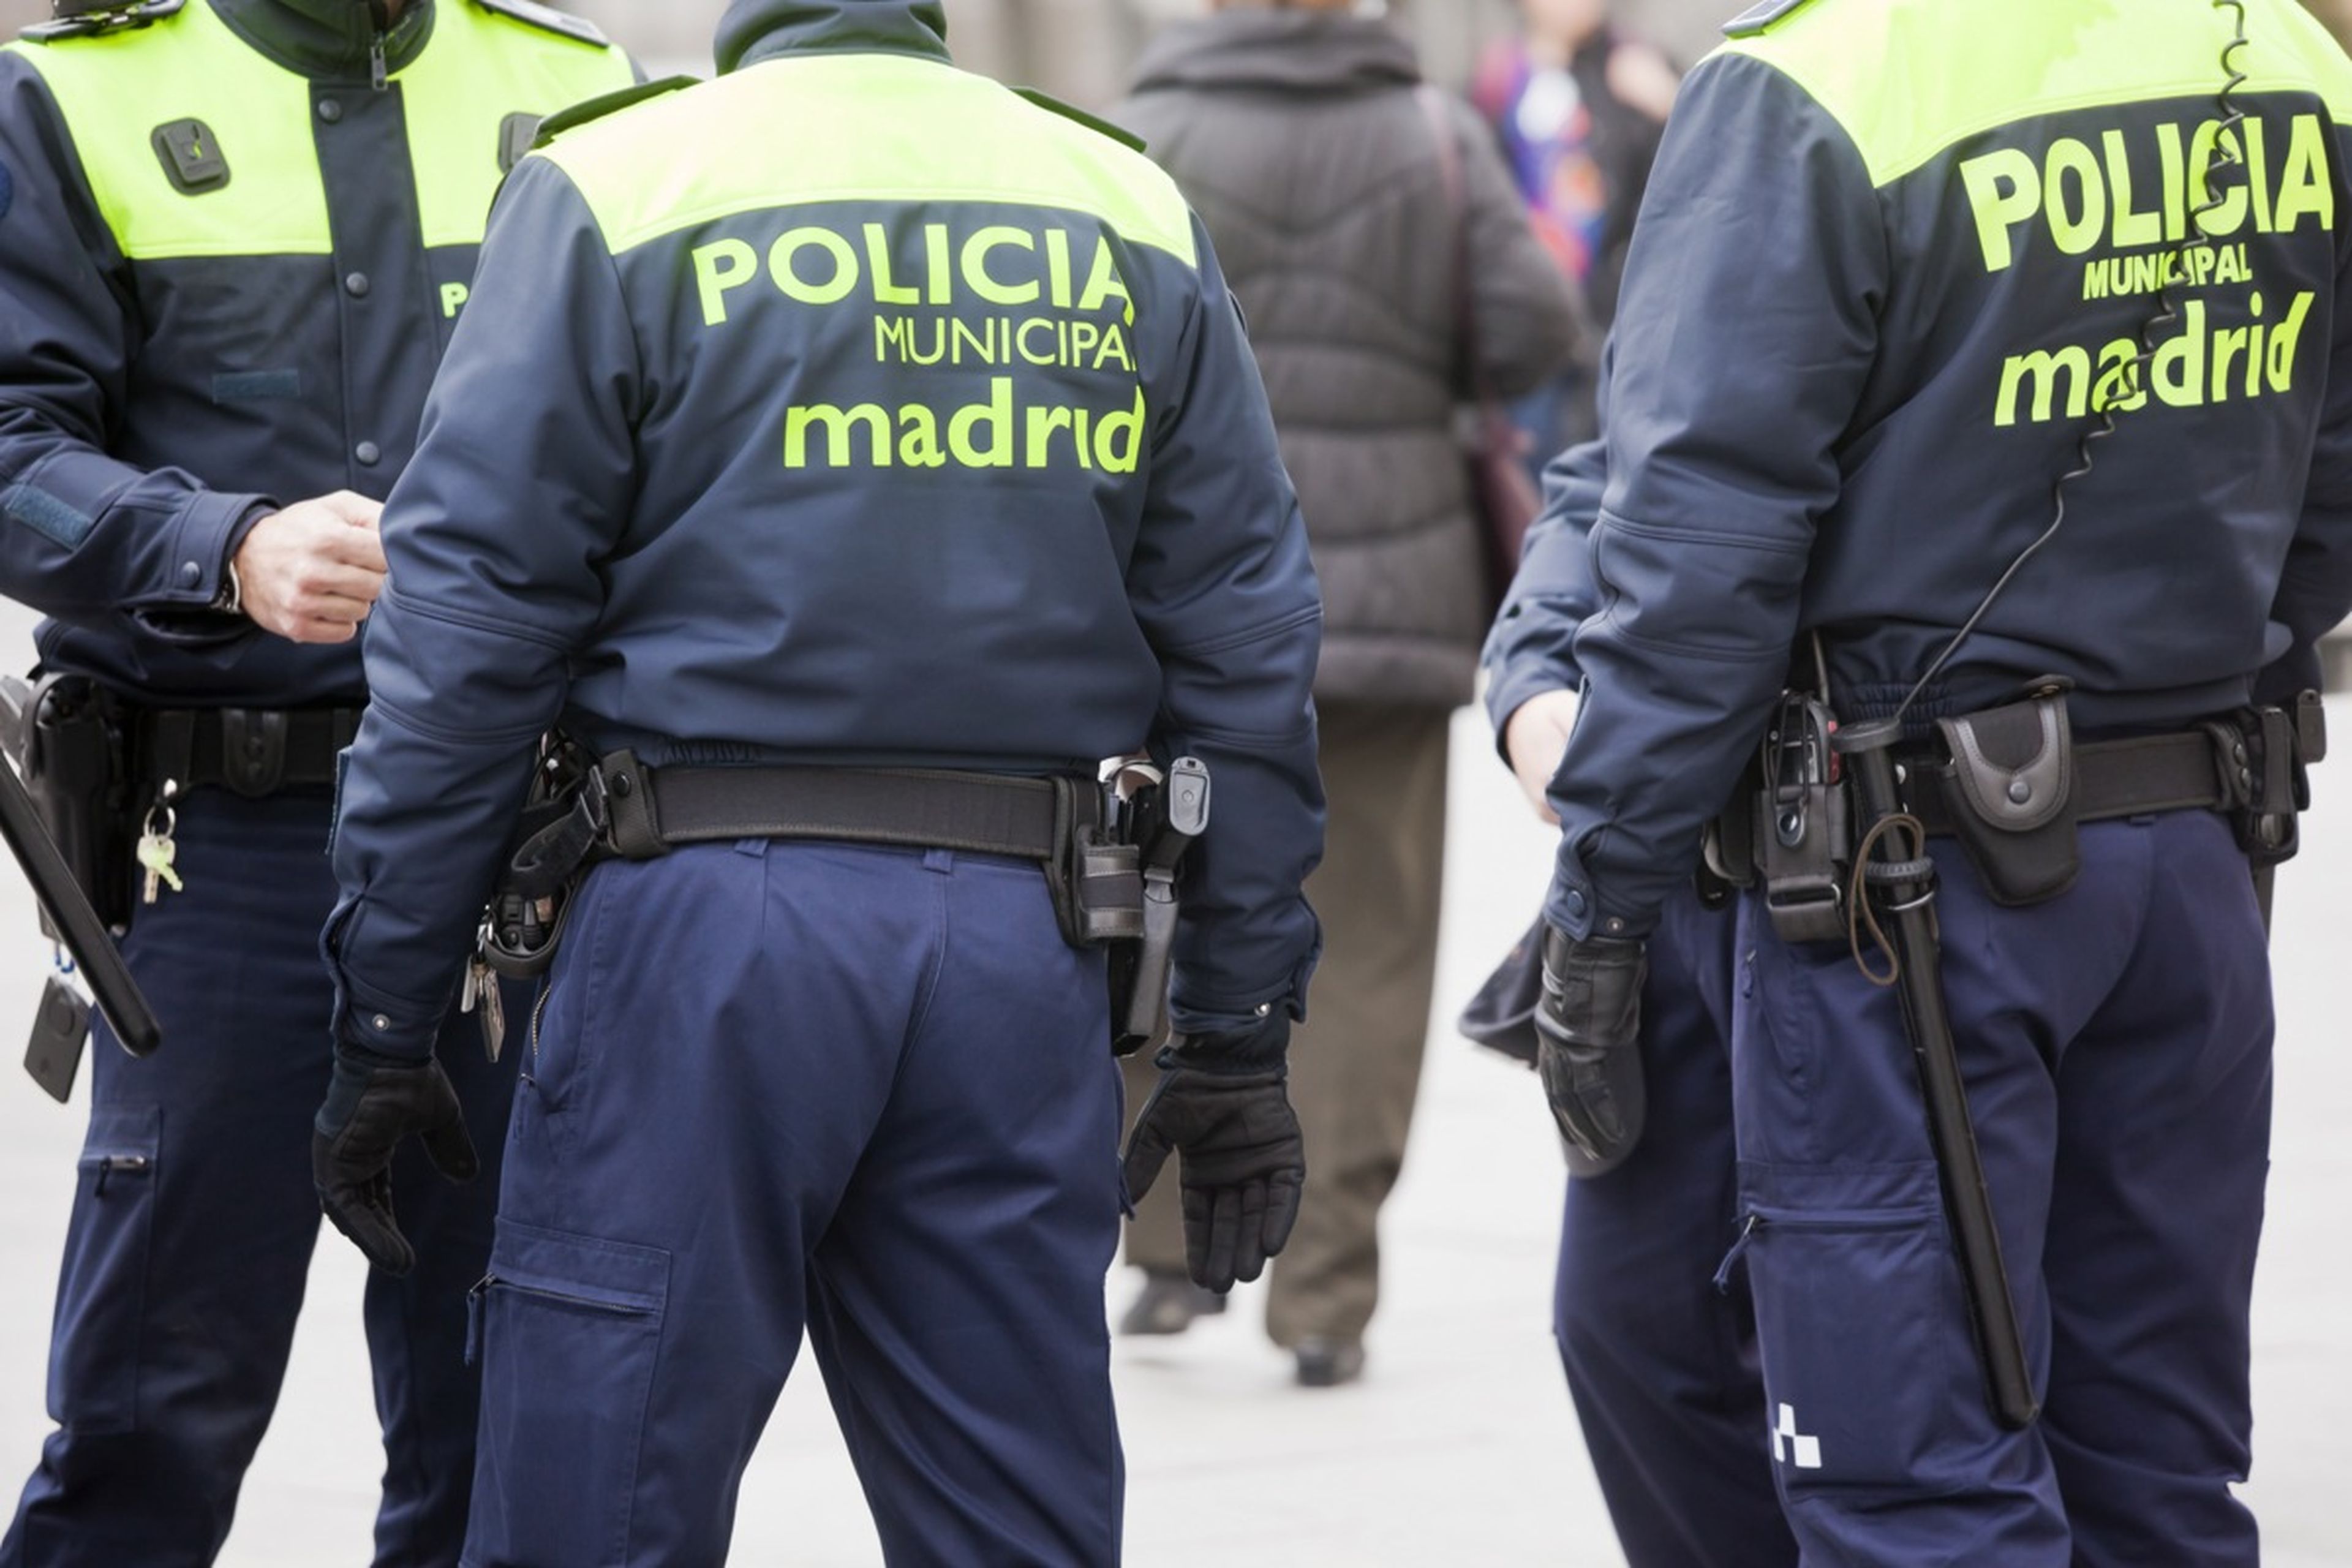 Policía municipal madrid